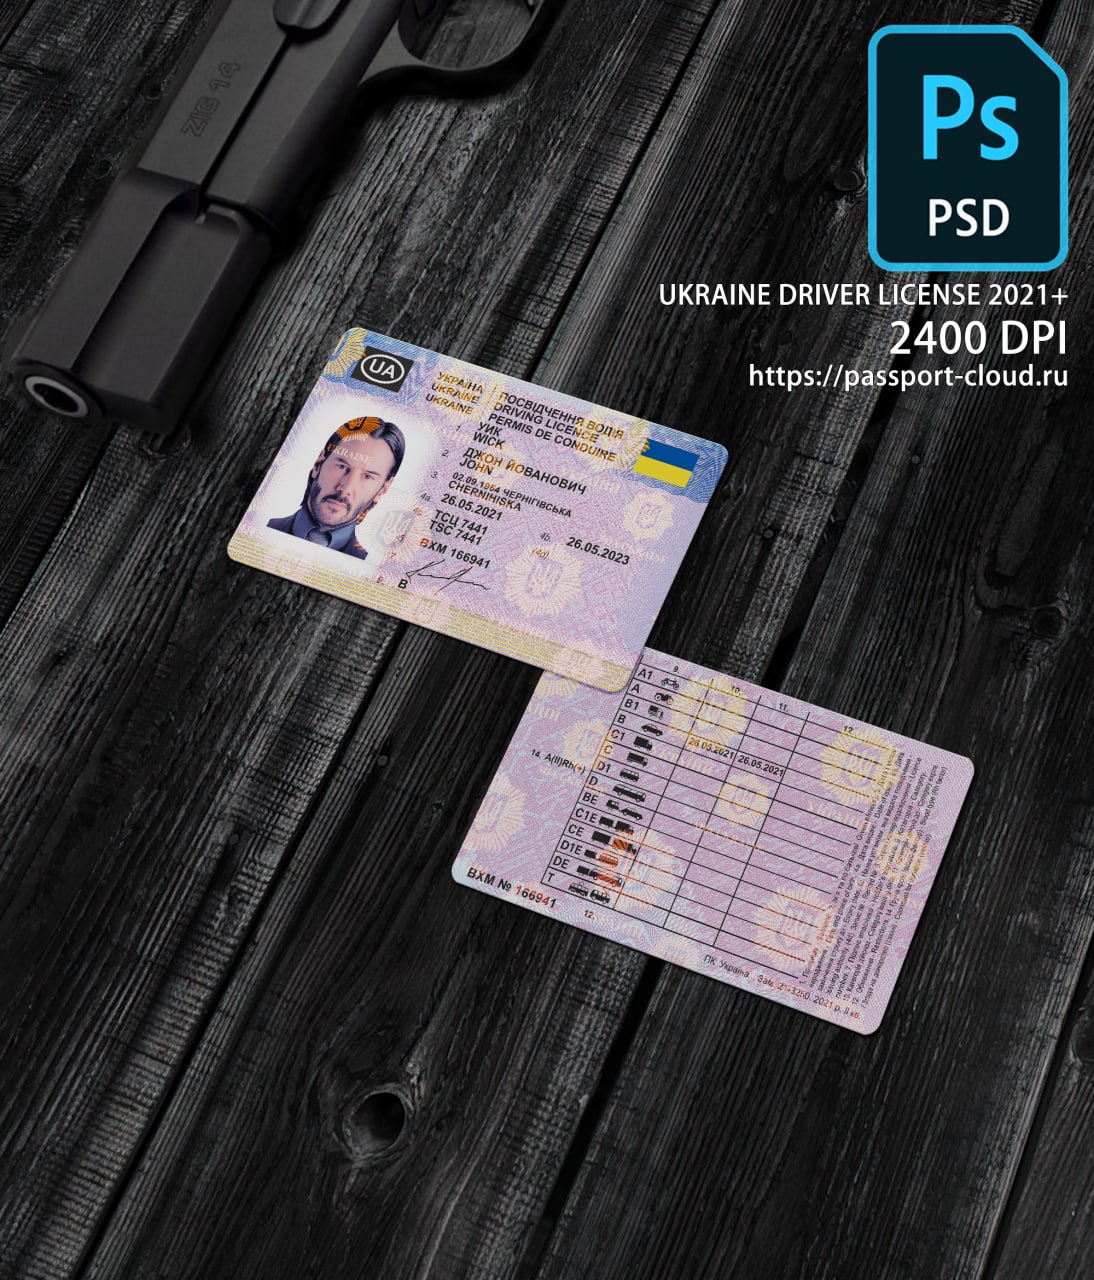 Ukraine Driver License 2021+1